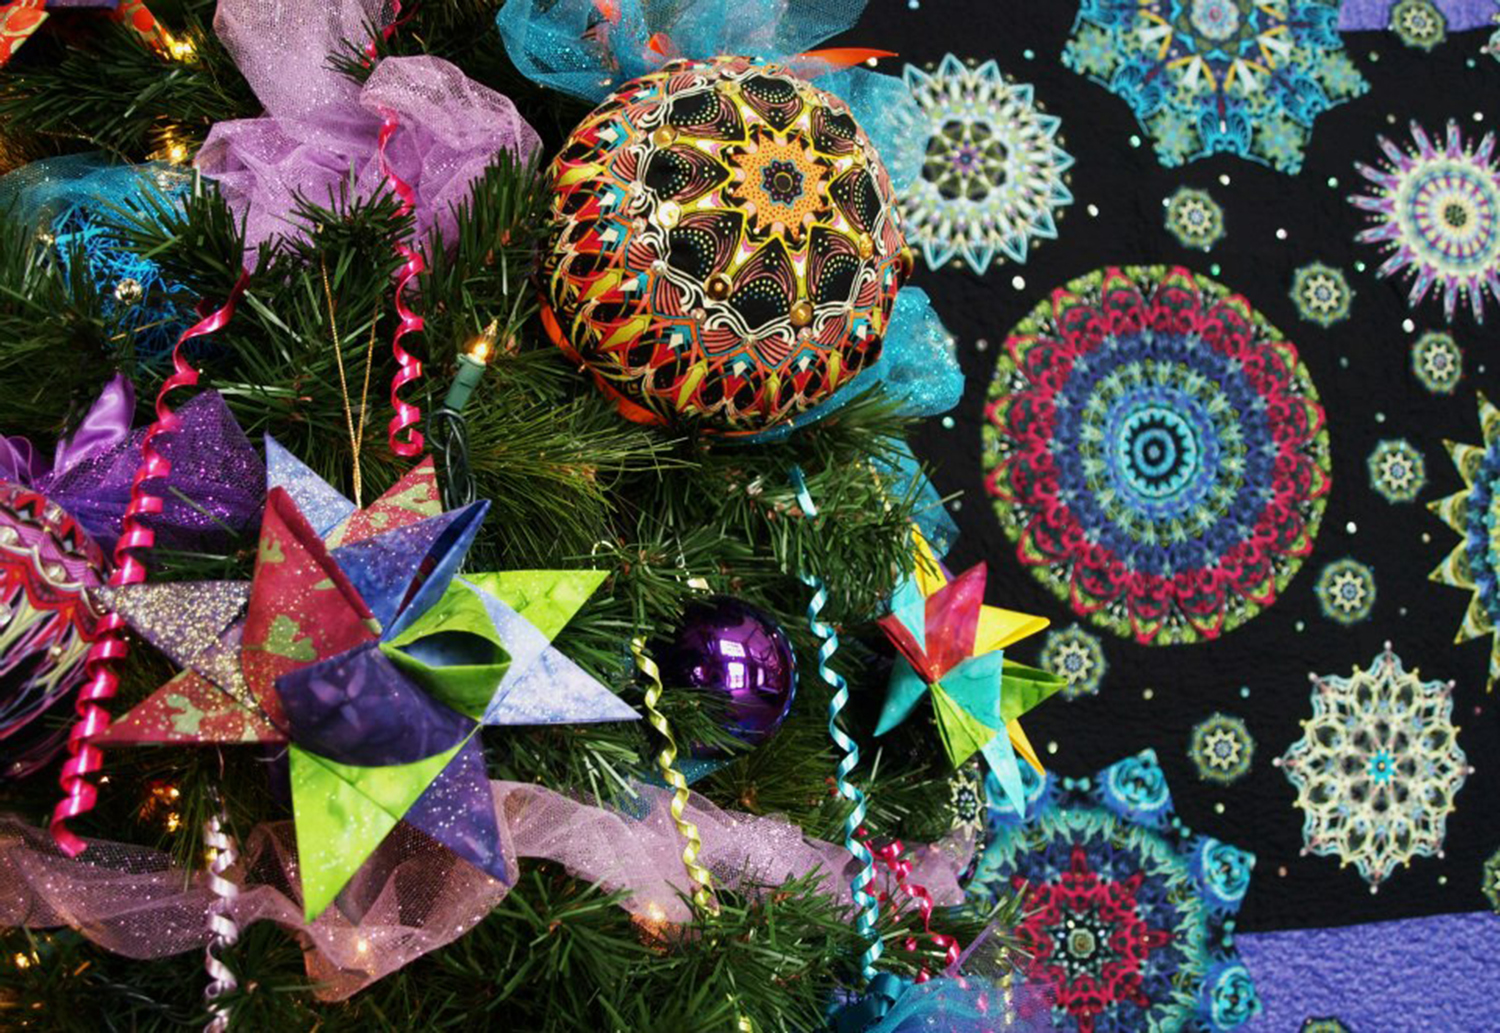 Ornaments adorning a holiday tree